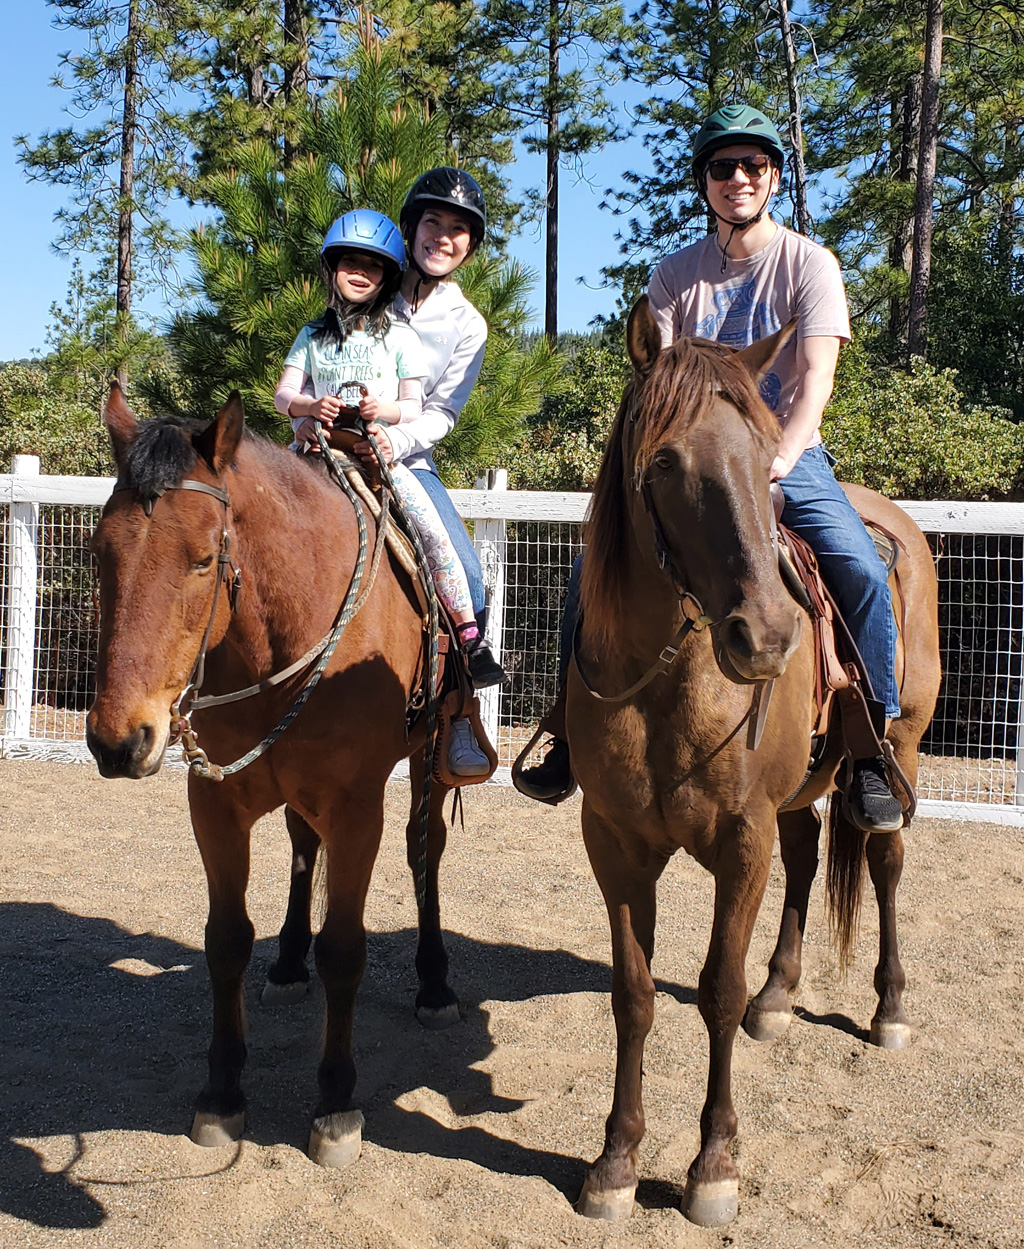 Enjoying the horses at the Dog & Pony Ranch